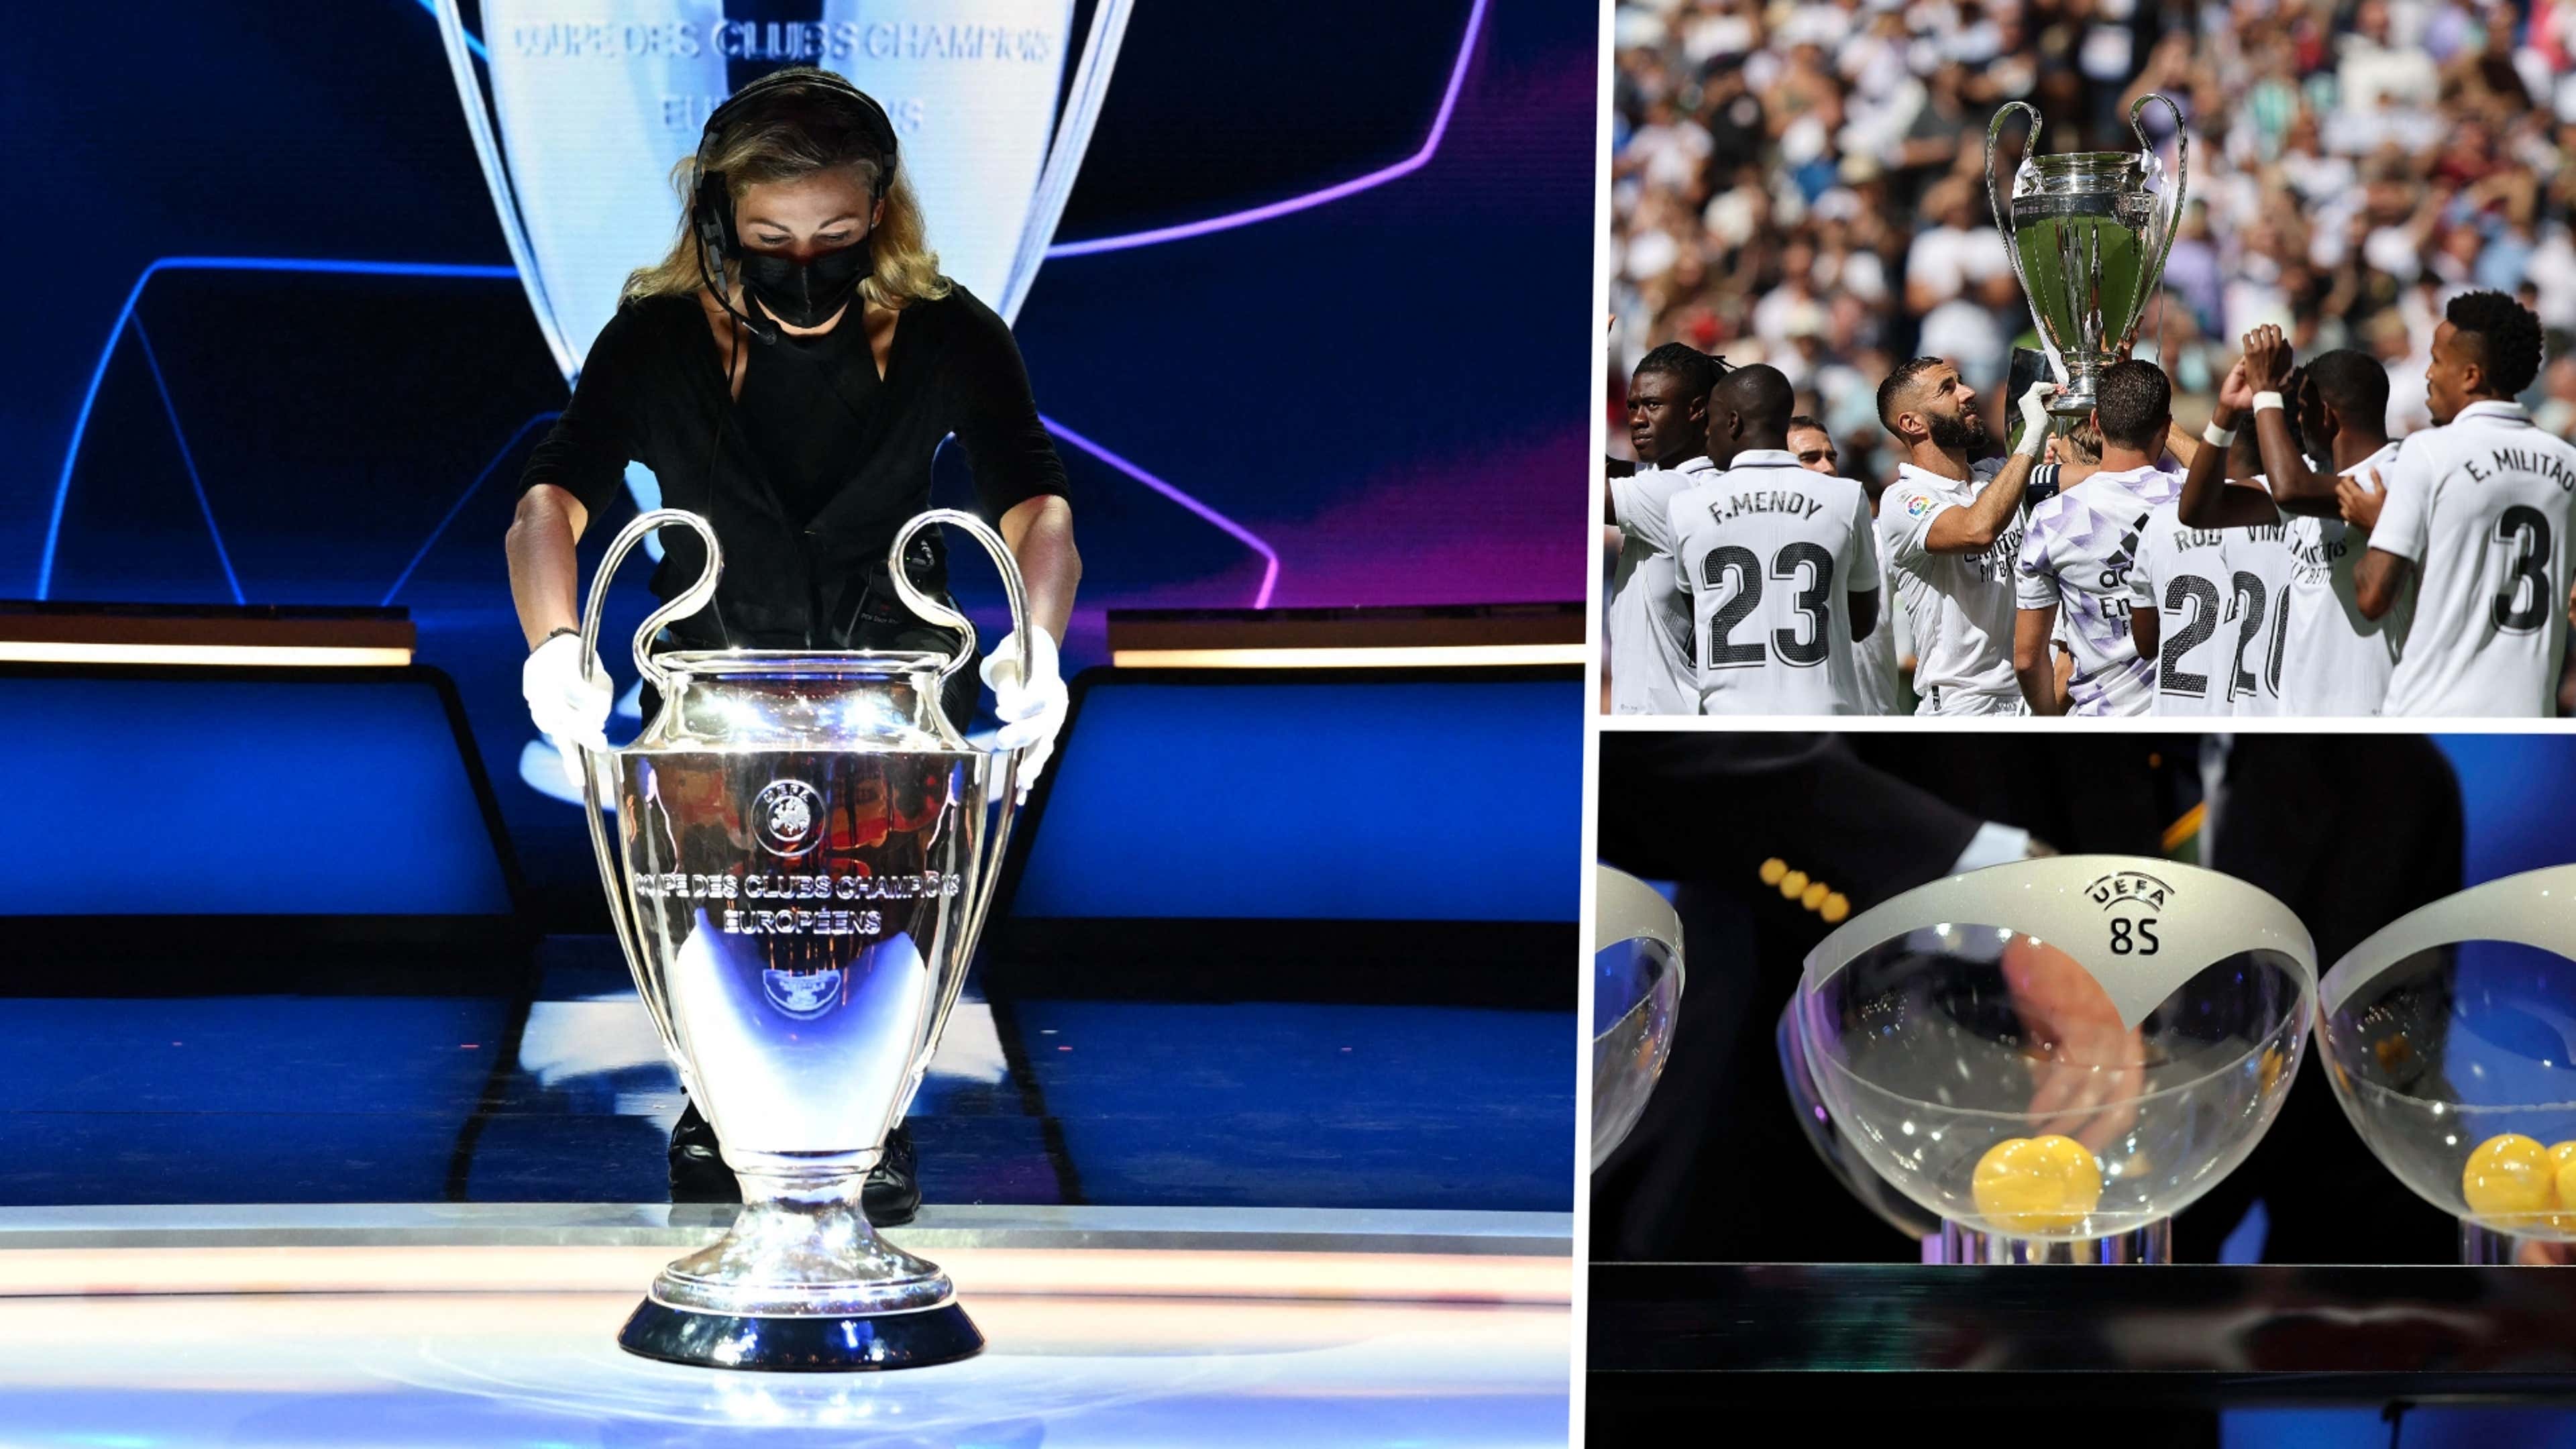 Champions League Final 2019: Date, Venue, Predictions for